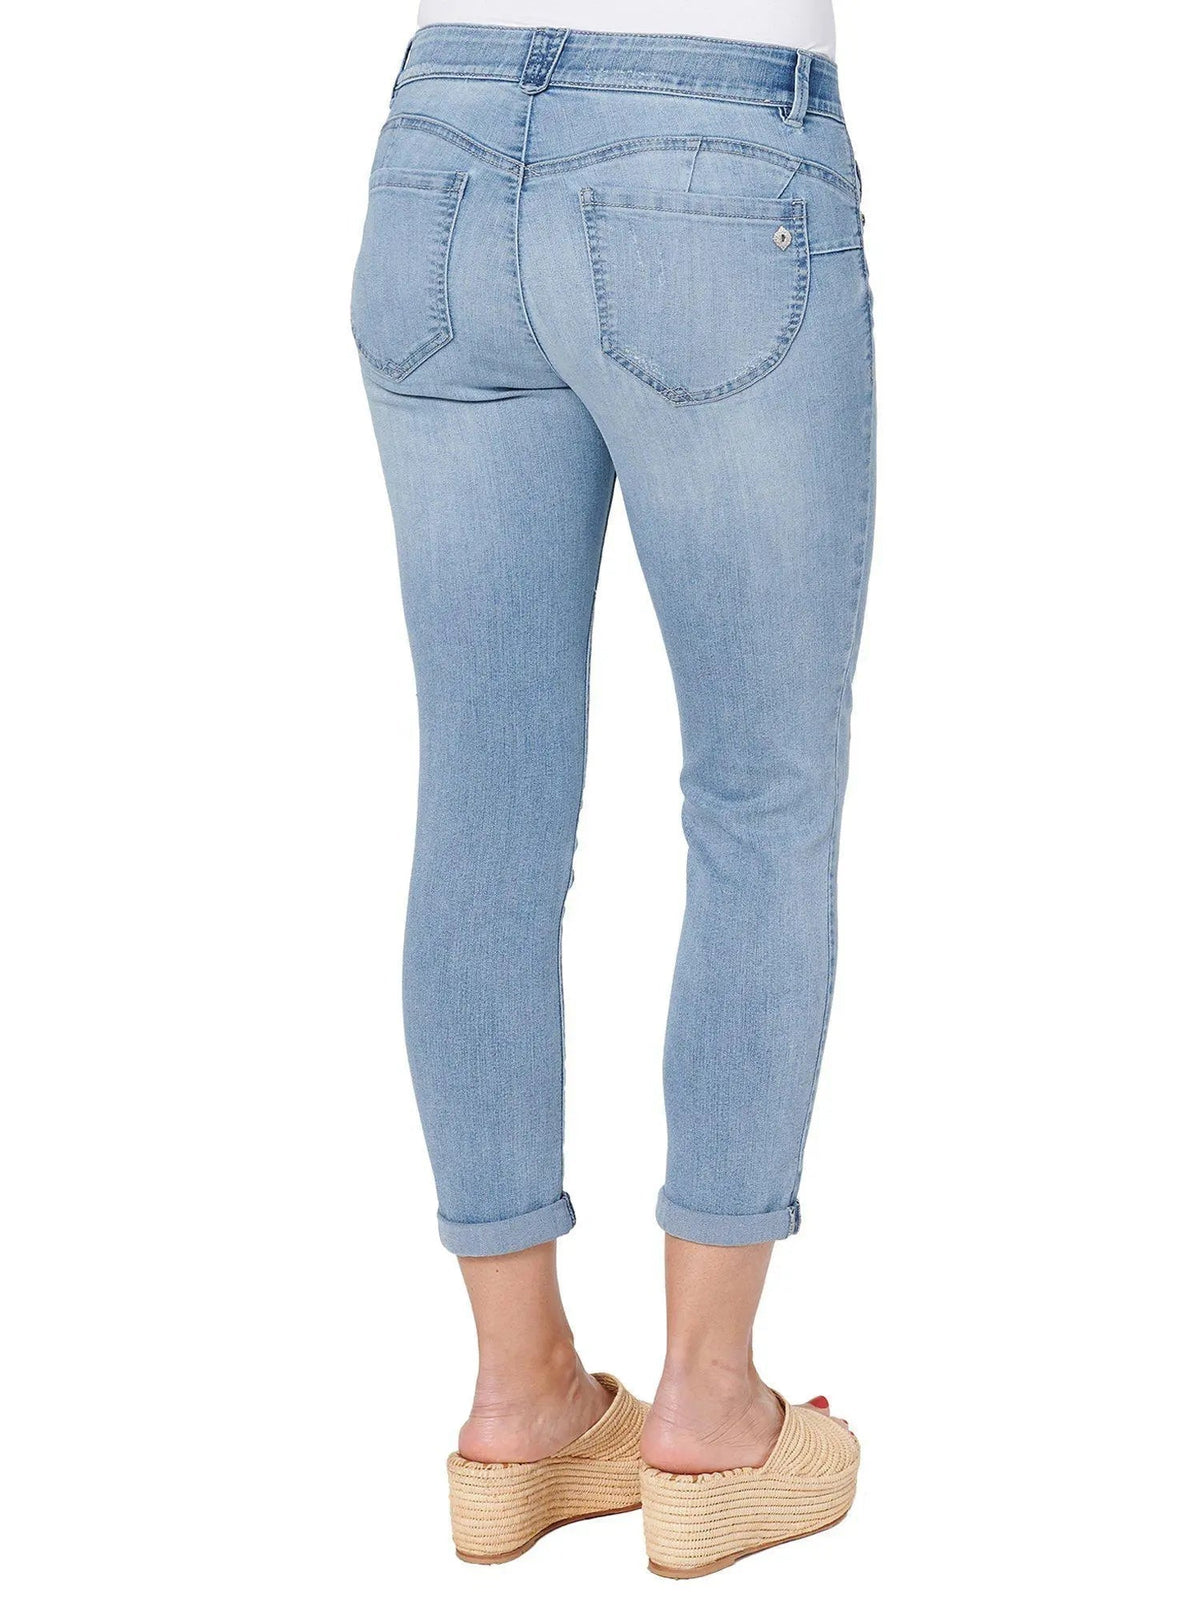 HUE Women's Cuffed Original Jeans Skimmer Leggings